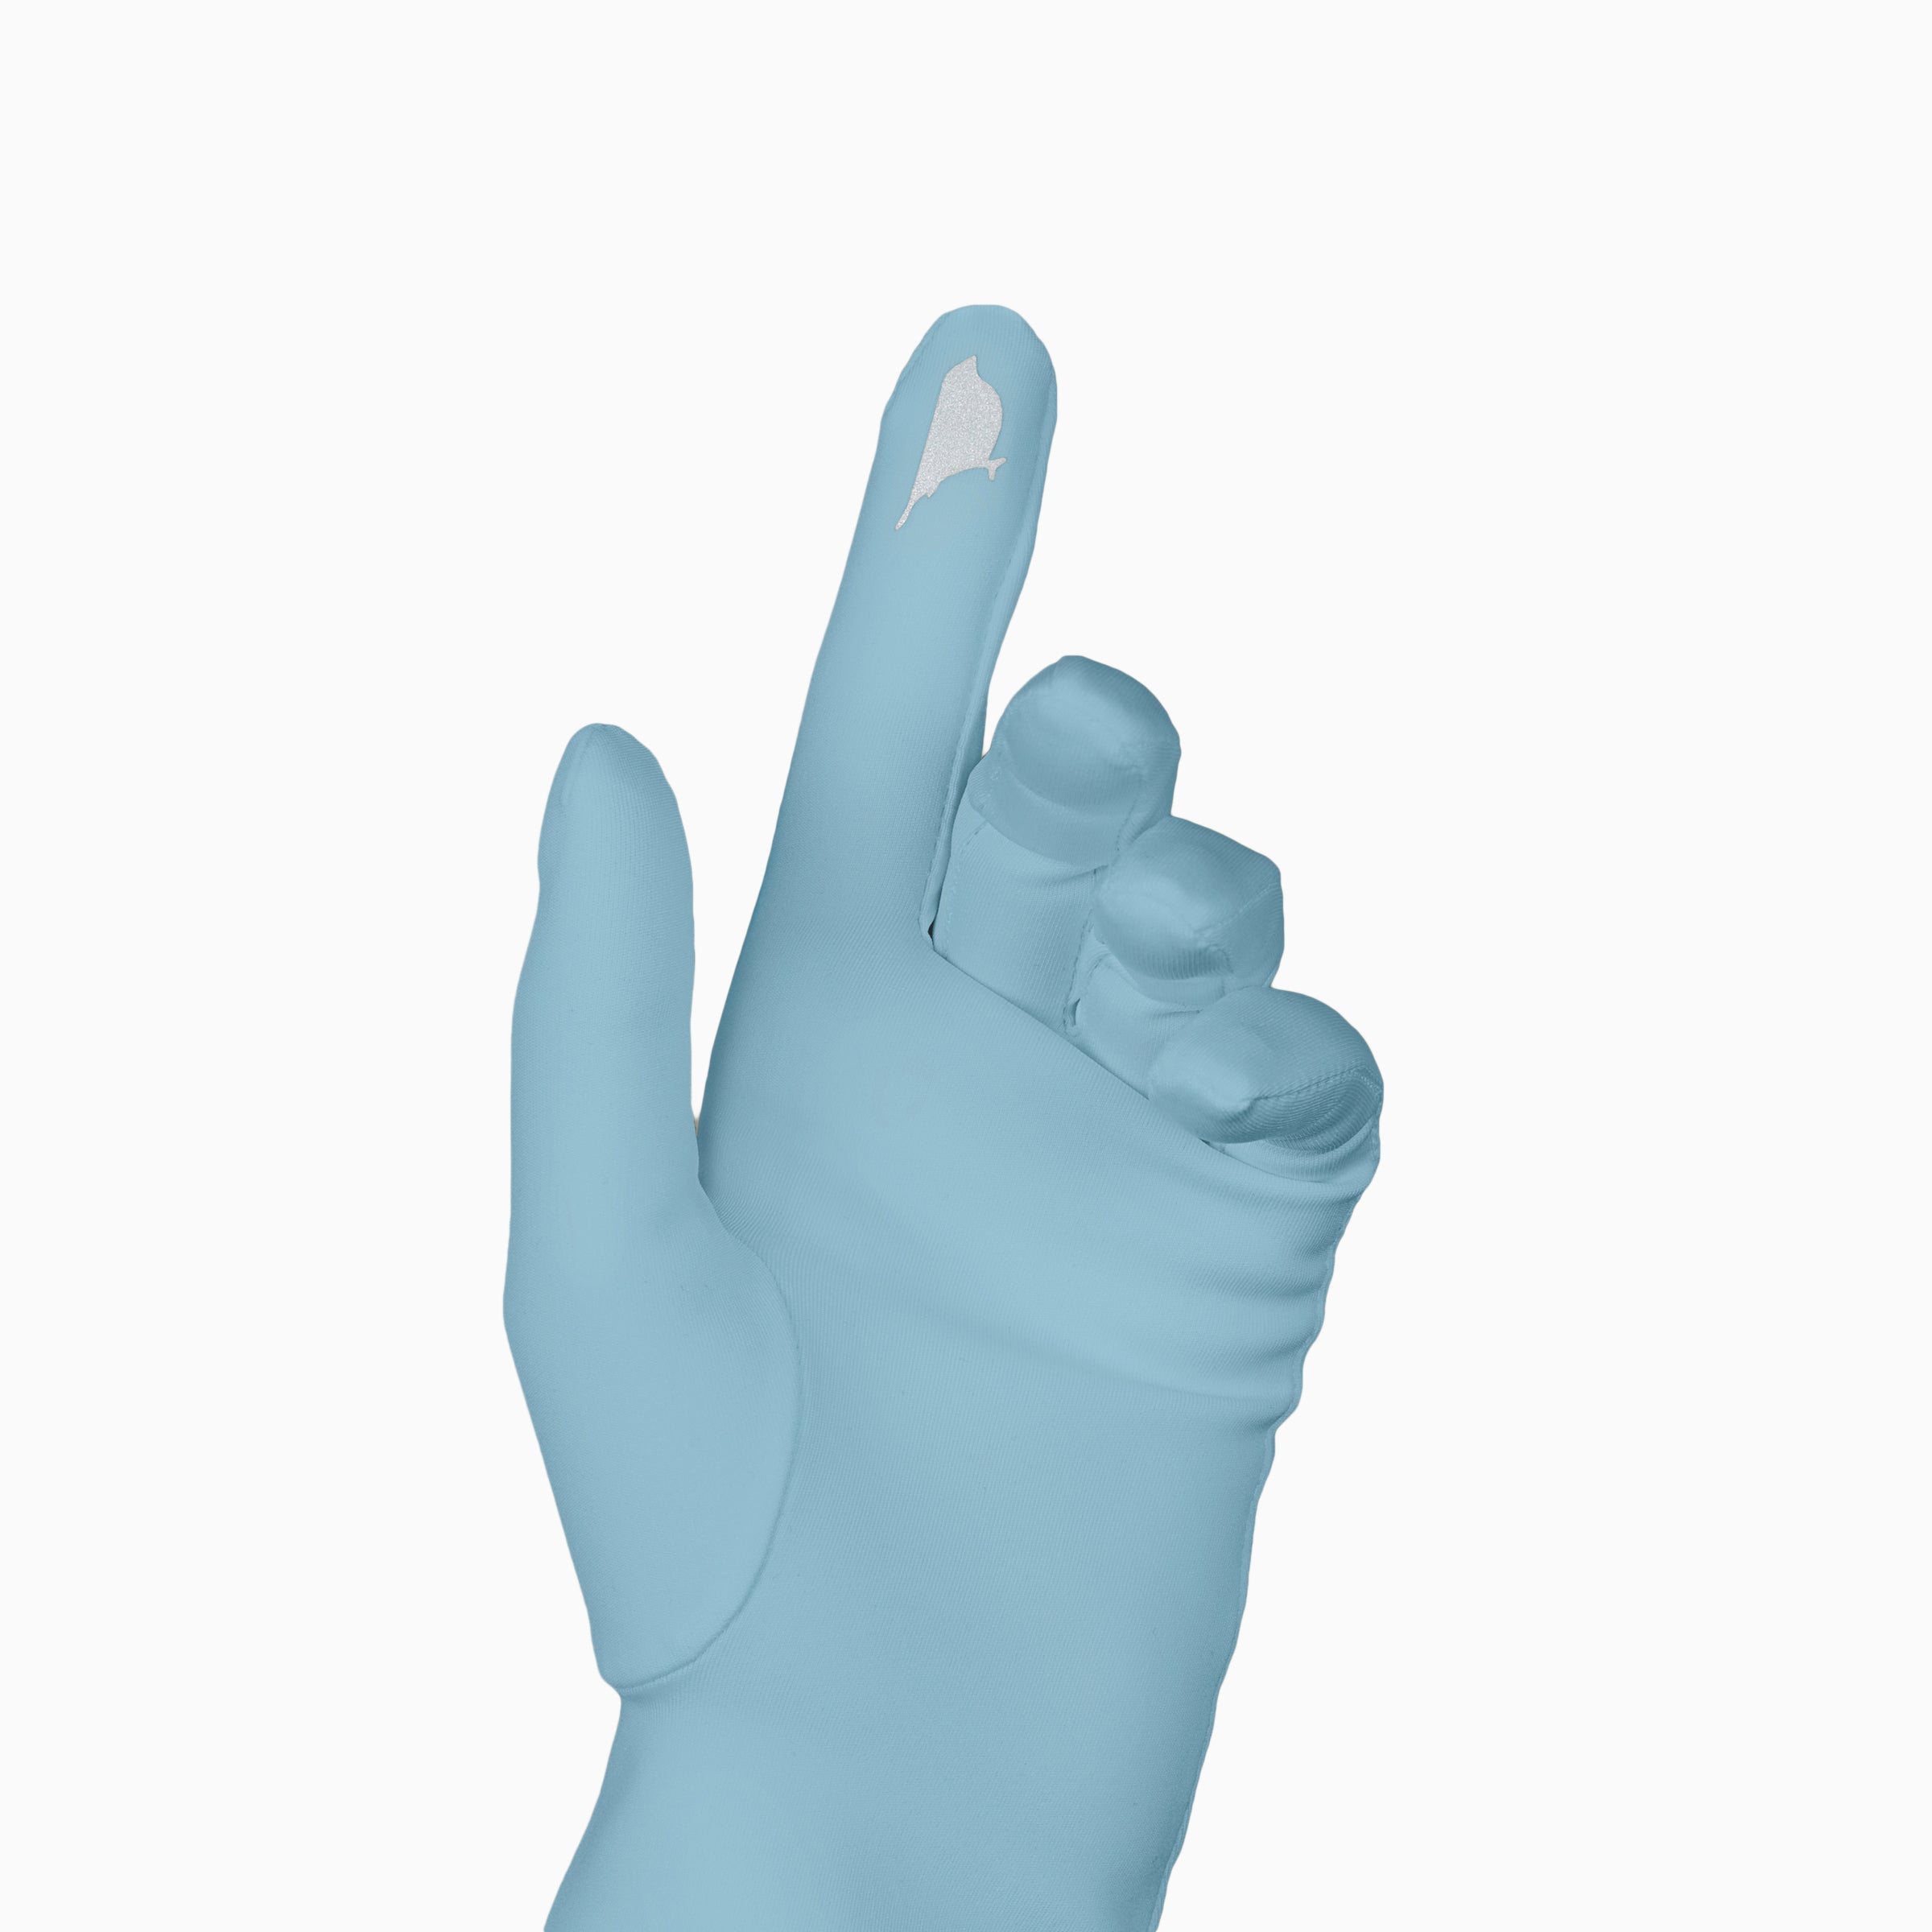 THE JILL light blue gloves with technology touchscreen index finger.